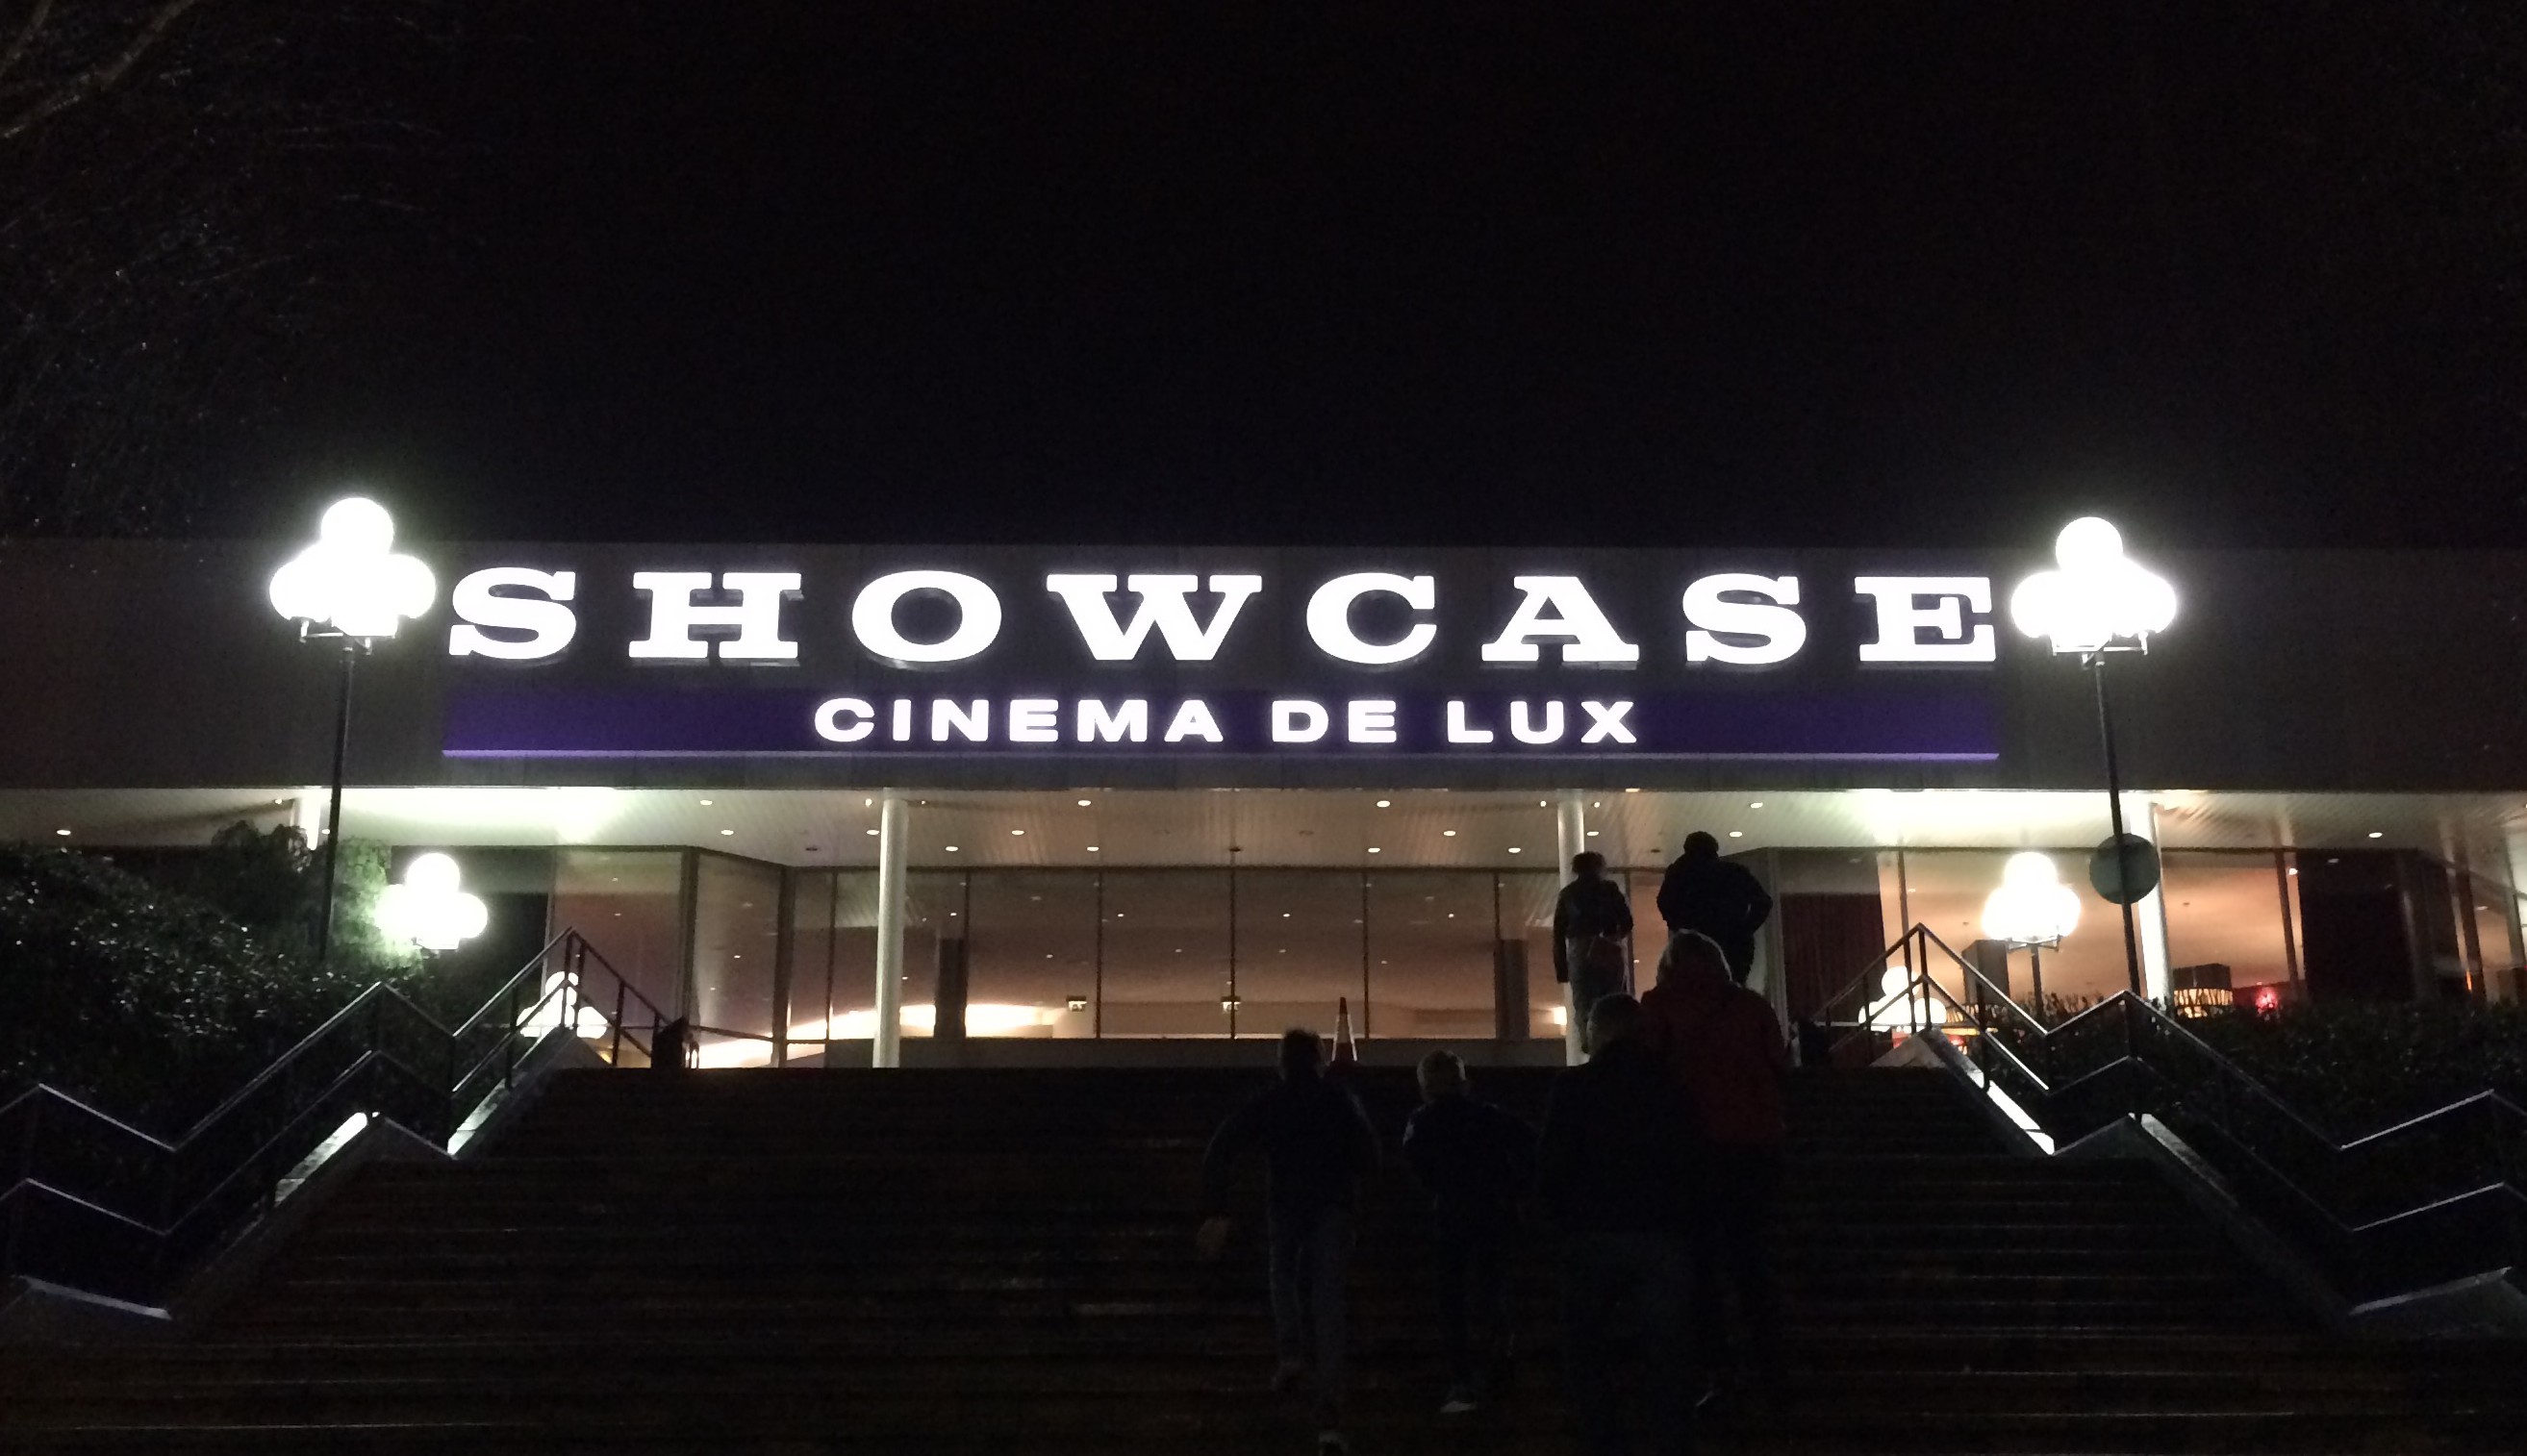 Showcase cinema de lux